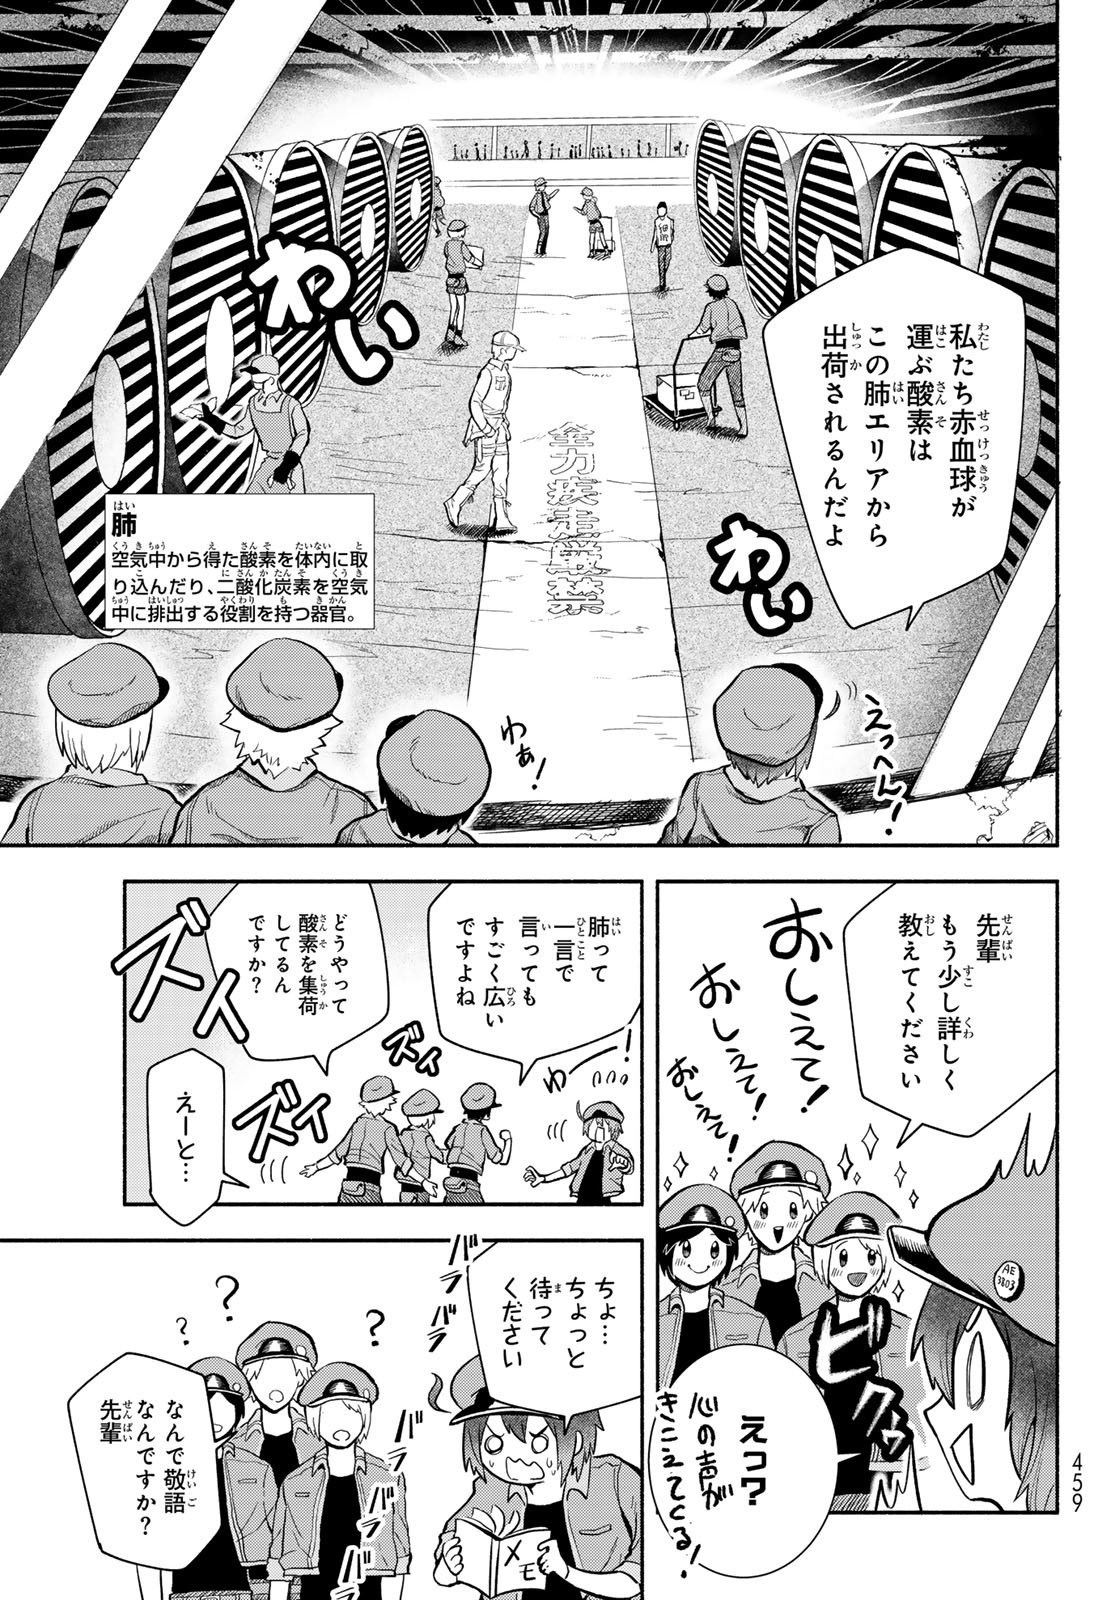 Hataraku Saibou Okusuri - Chapter 7.1 - Page 5